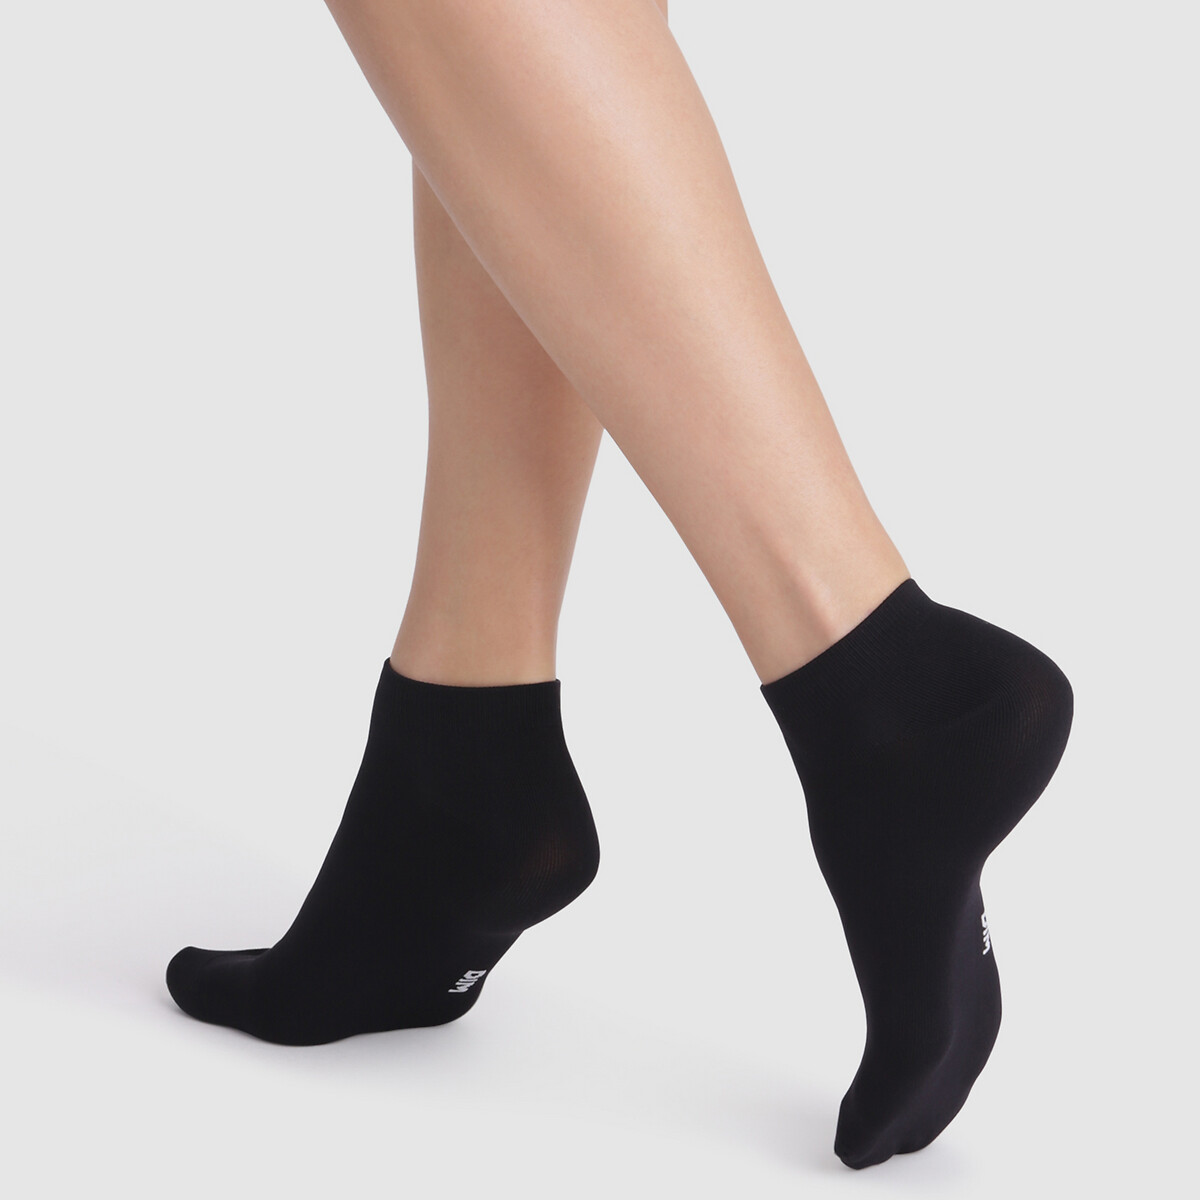 DIM Womens Ankle Socks, Pack of 4